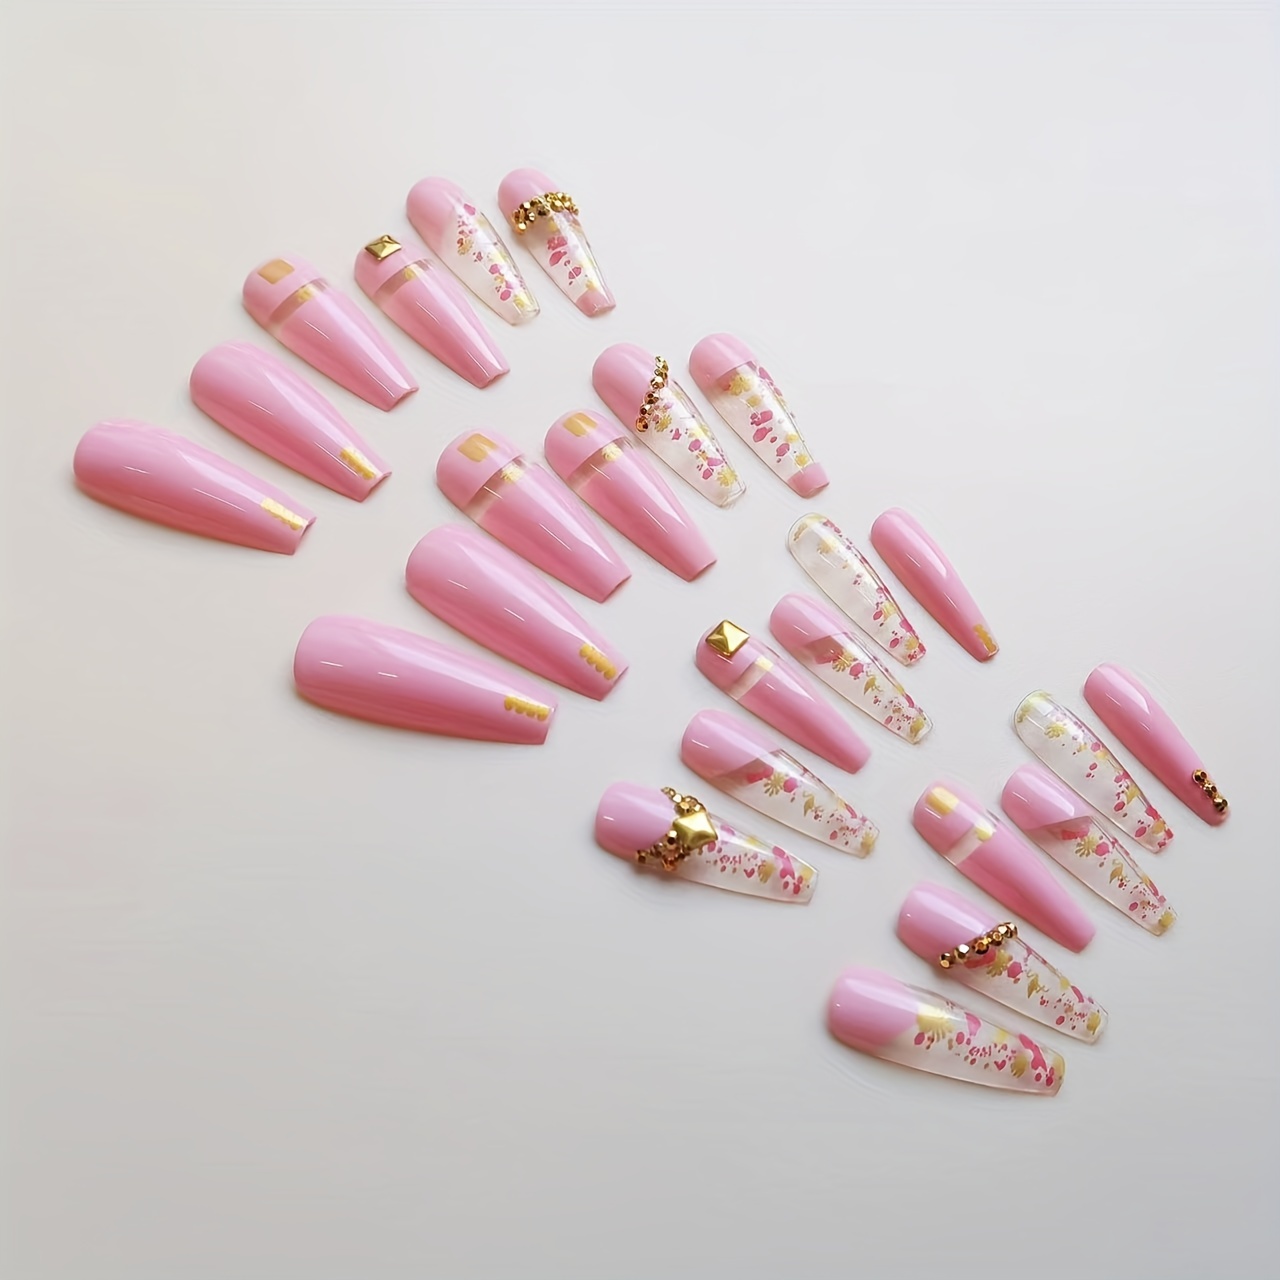 light pink rhinestones nails handmade salon